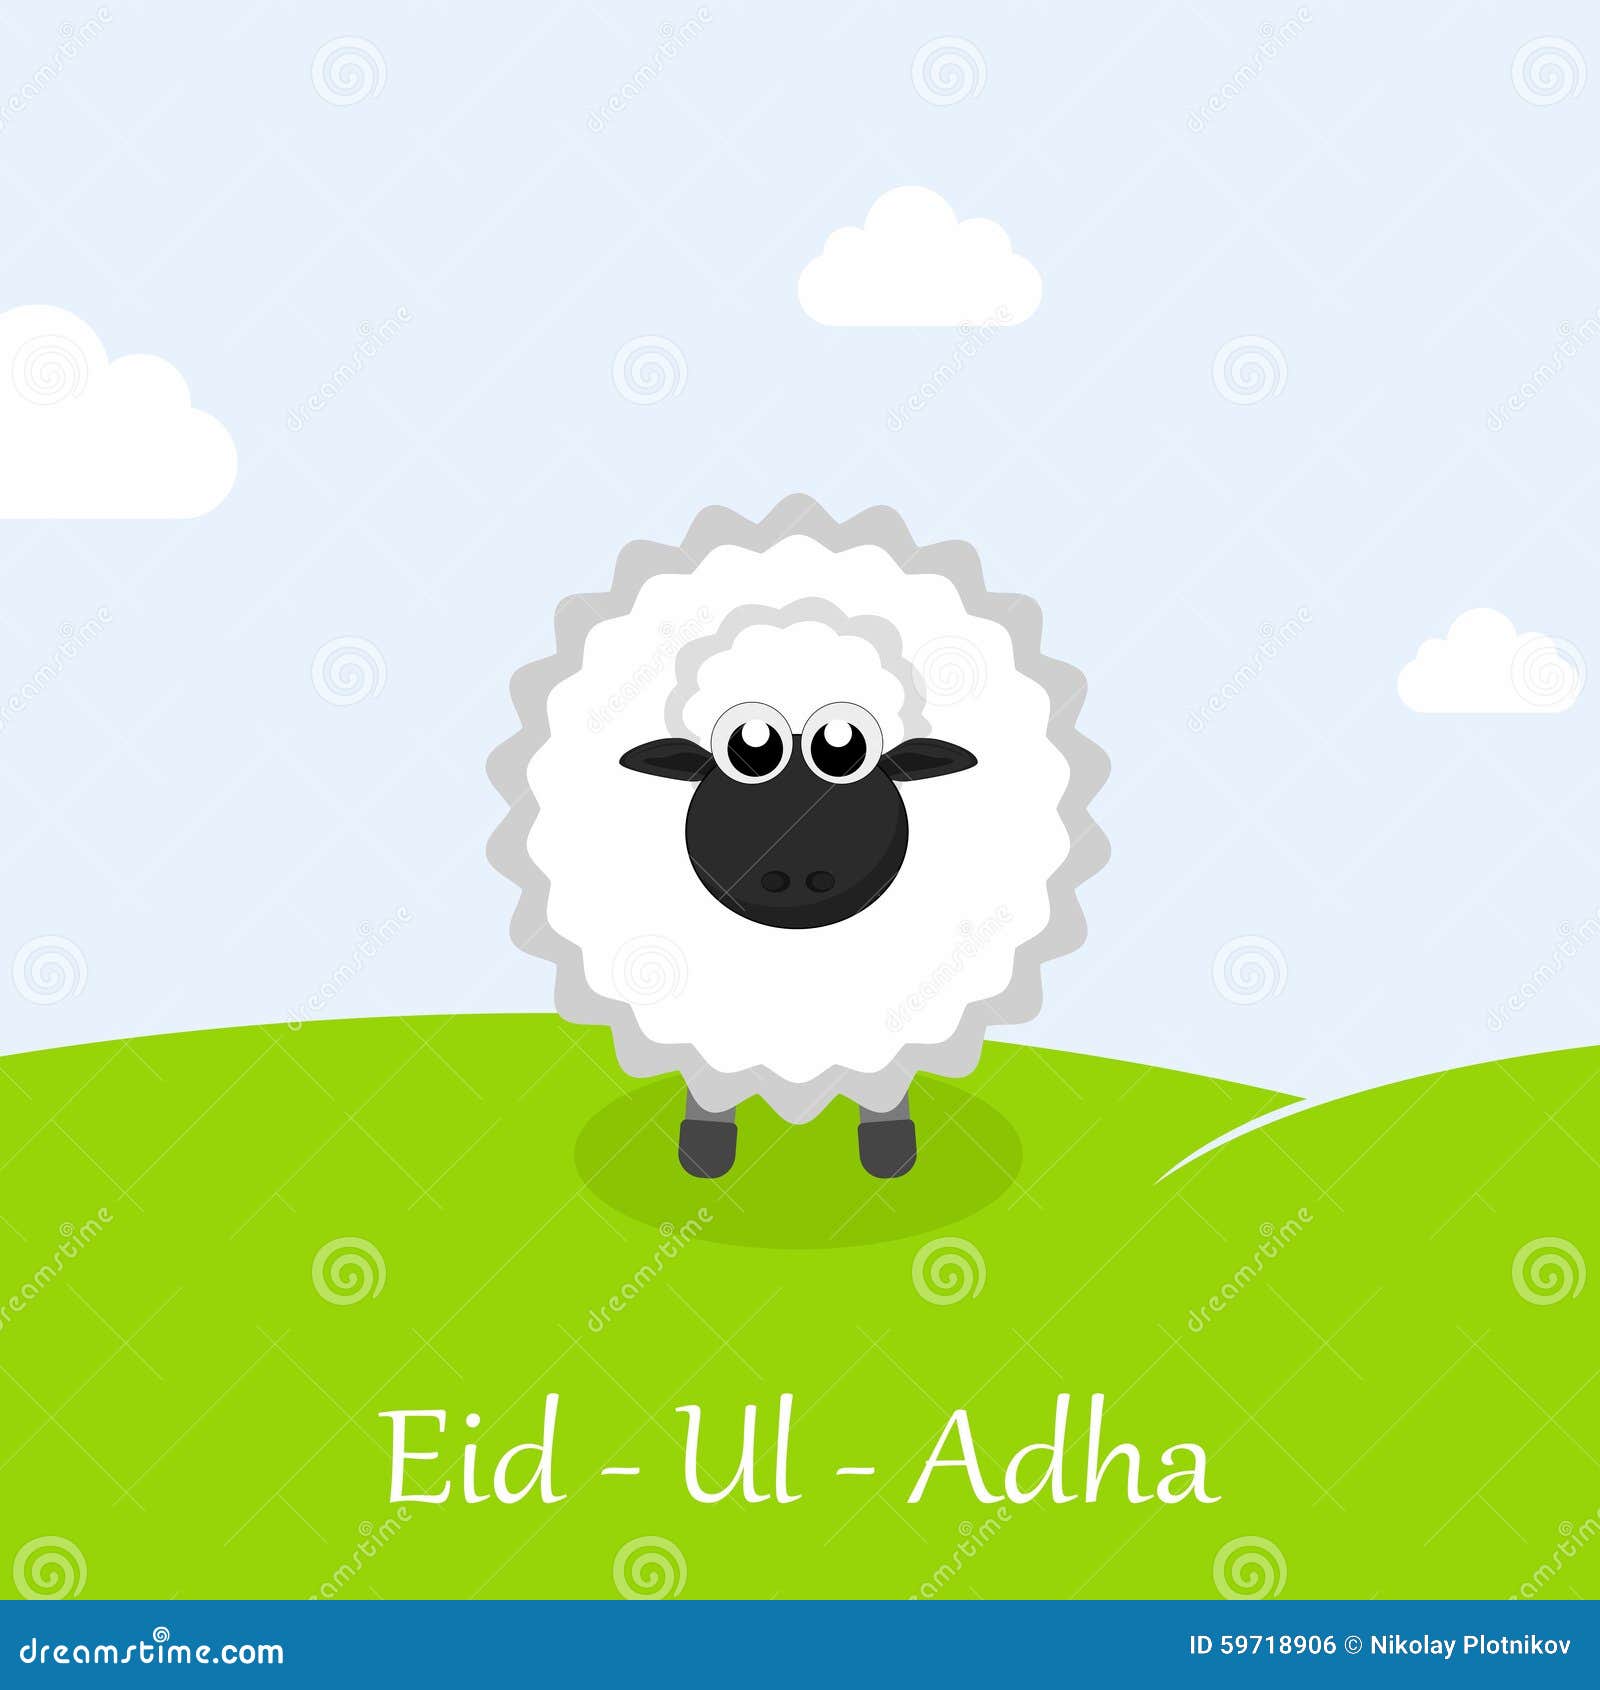 Eid-Ul-Adha Greeting Card With Sheep. Stock Vector - Image 